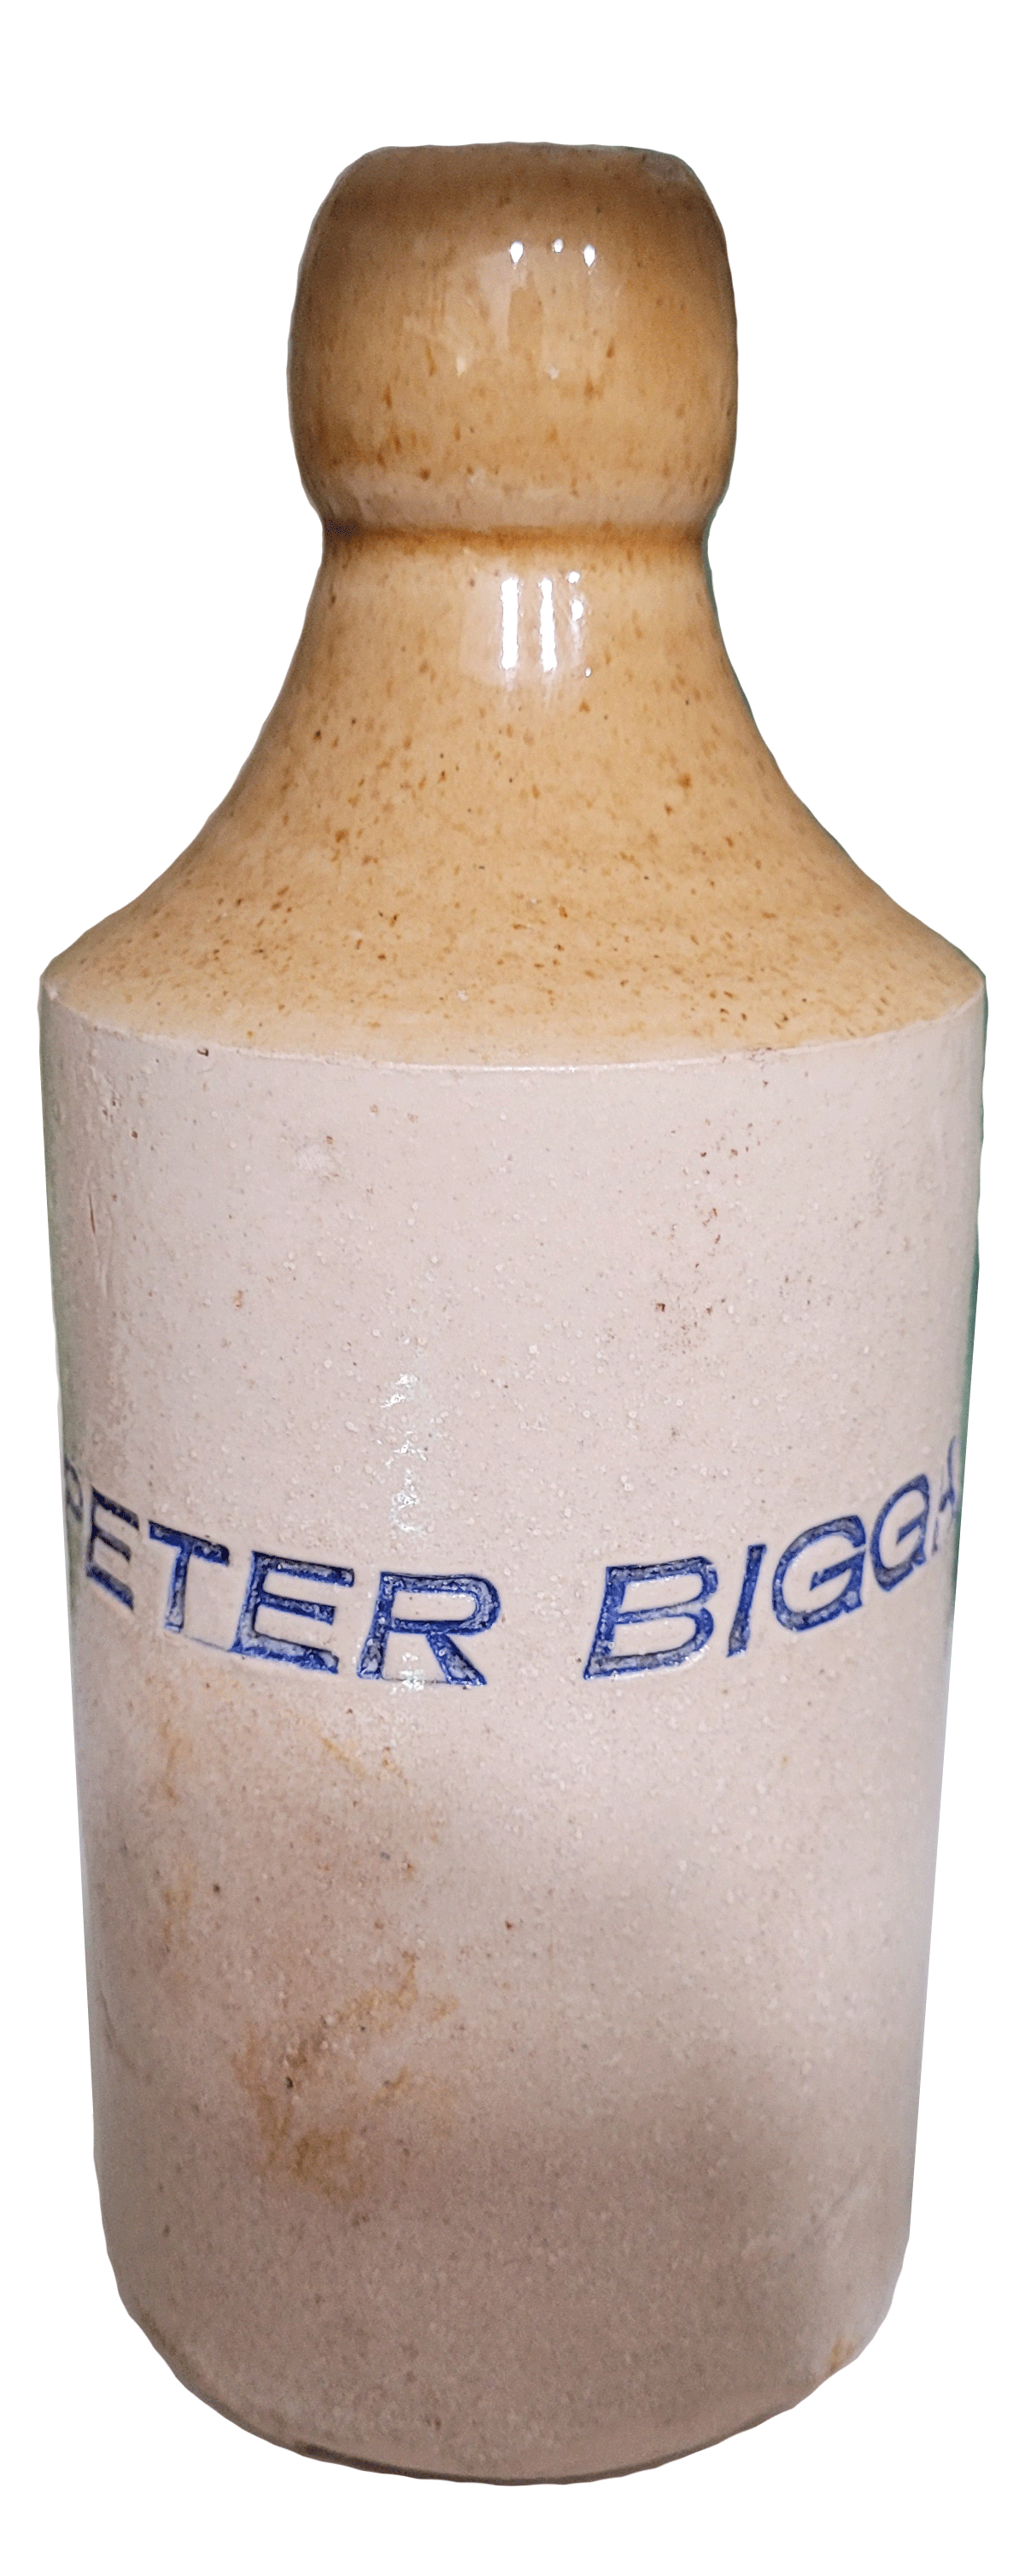 Peter Biggam Ginger Beer Bottle